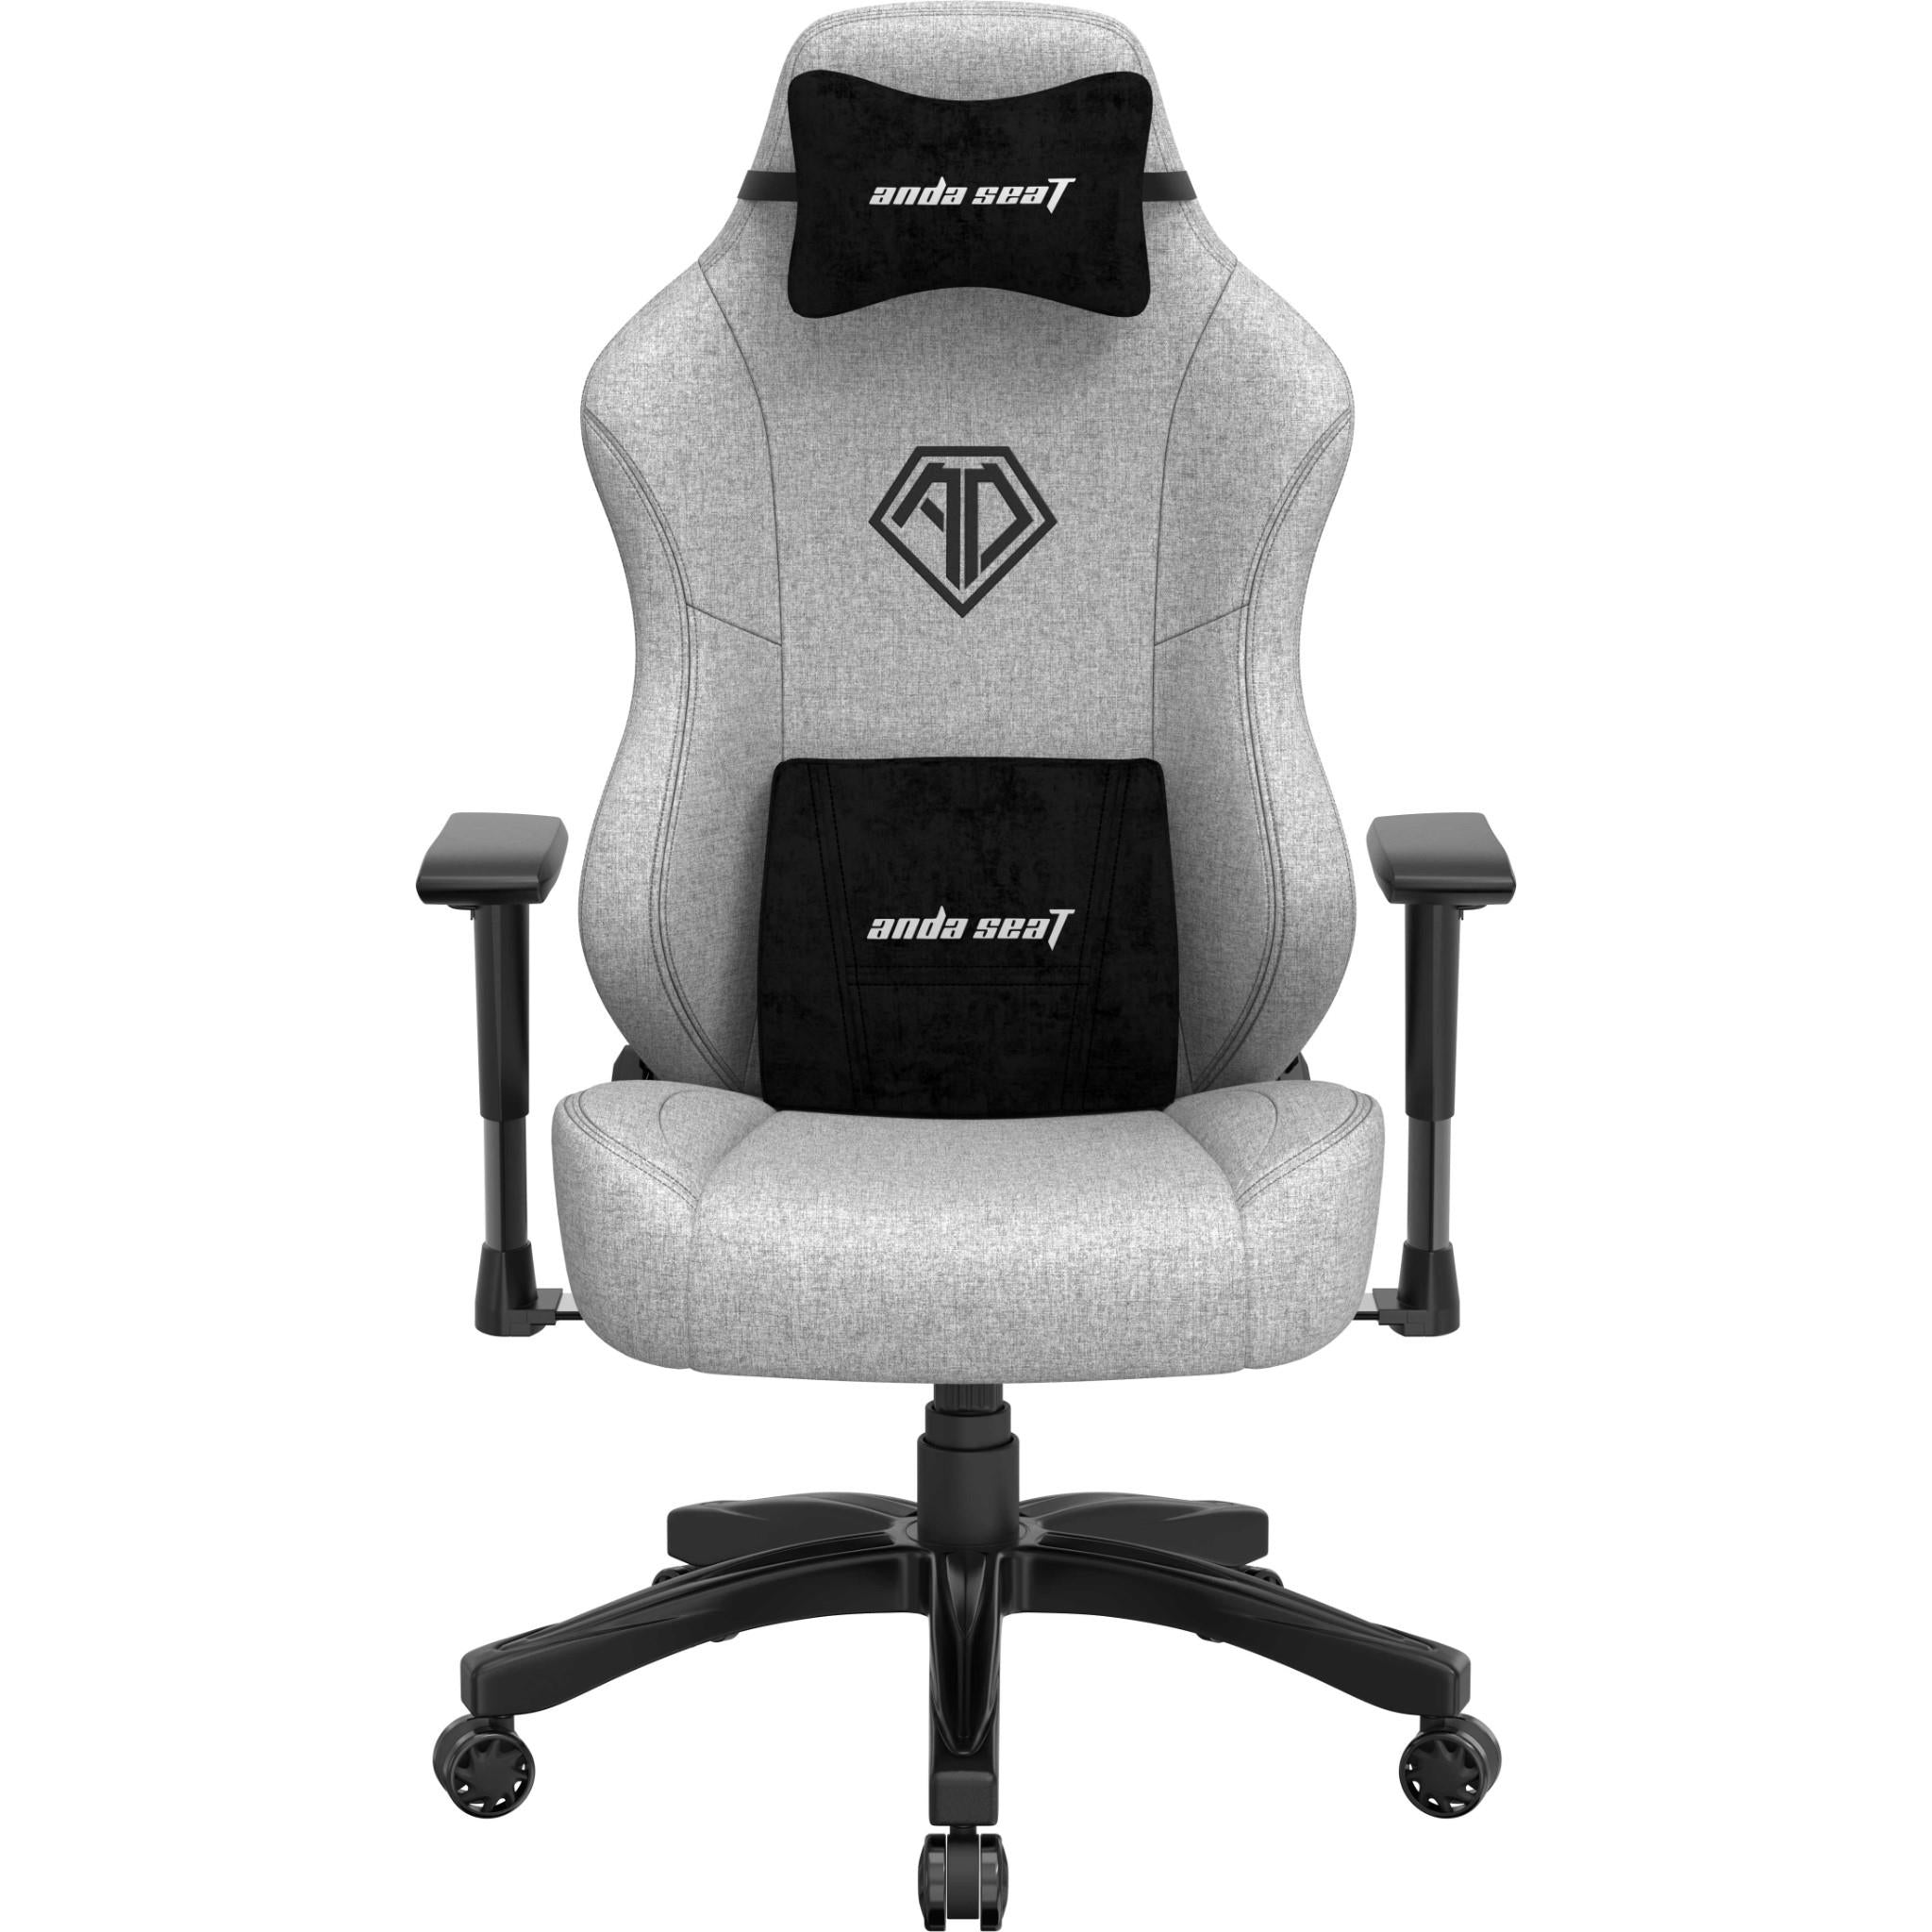 anda seat phantom 3 gaming chair grey fabric (large)